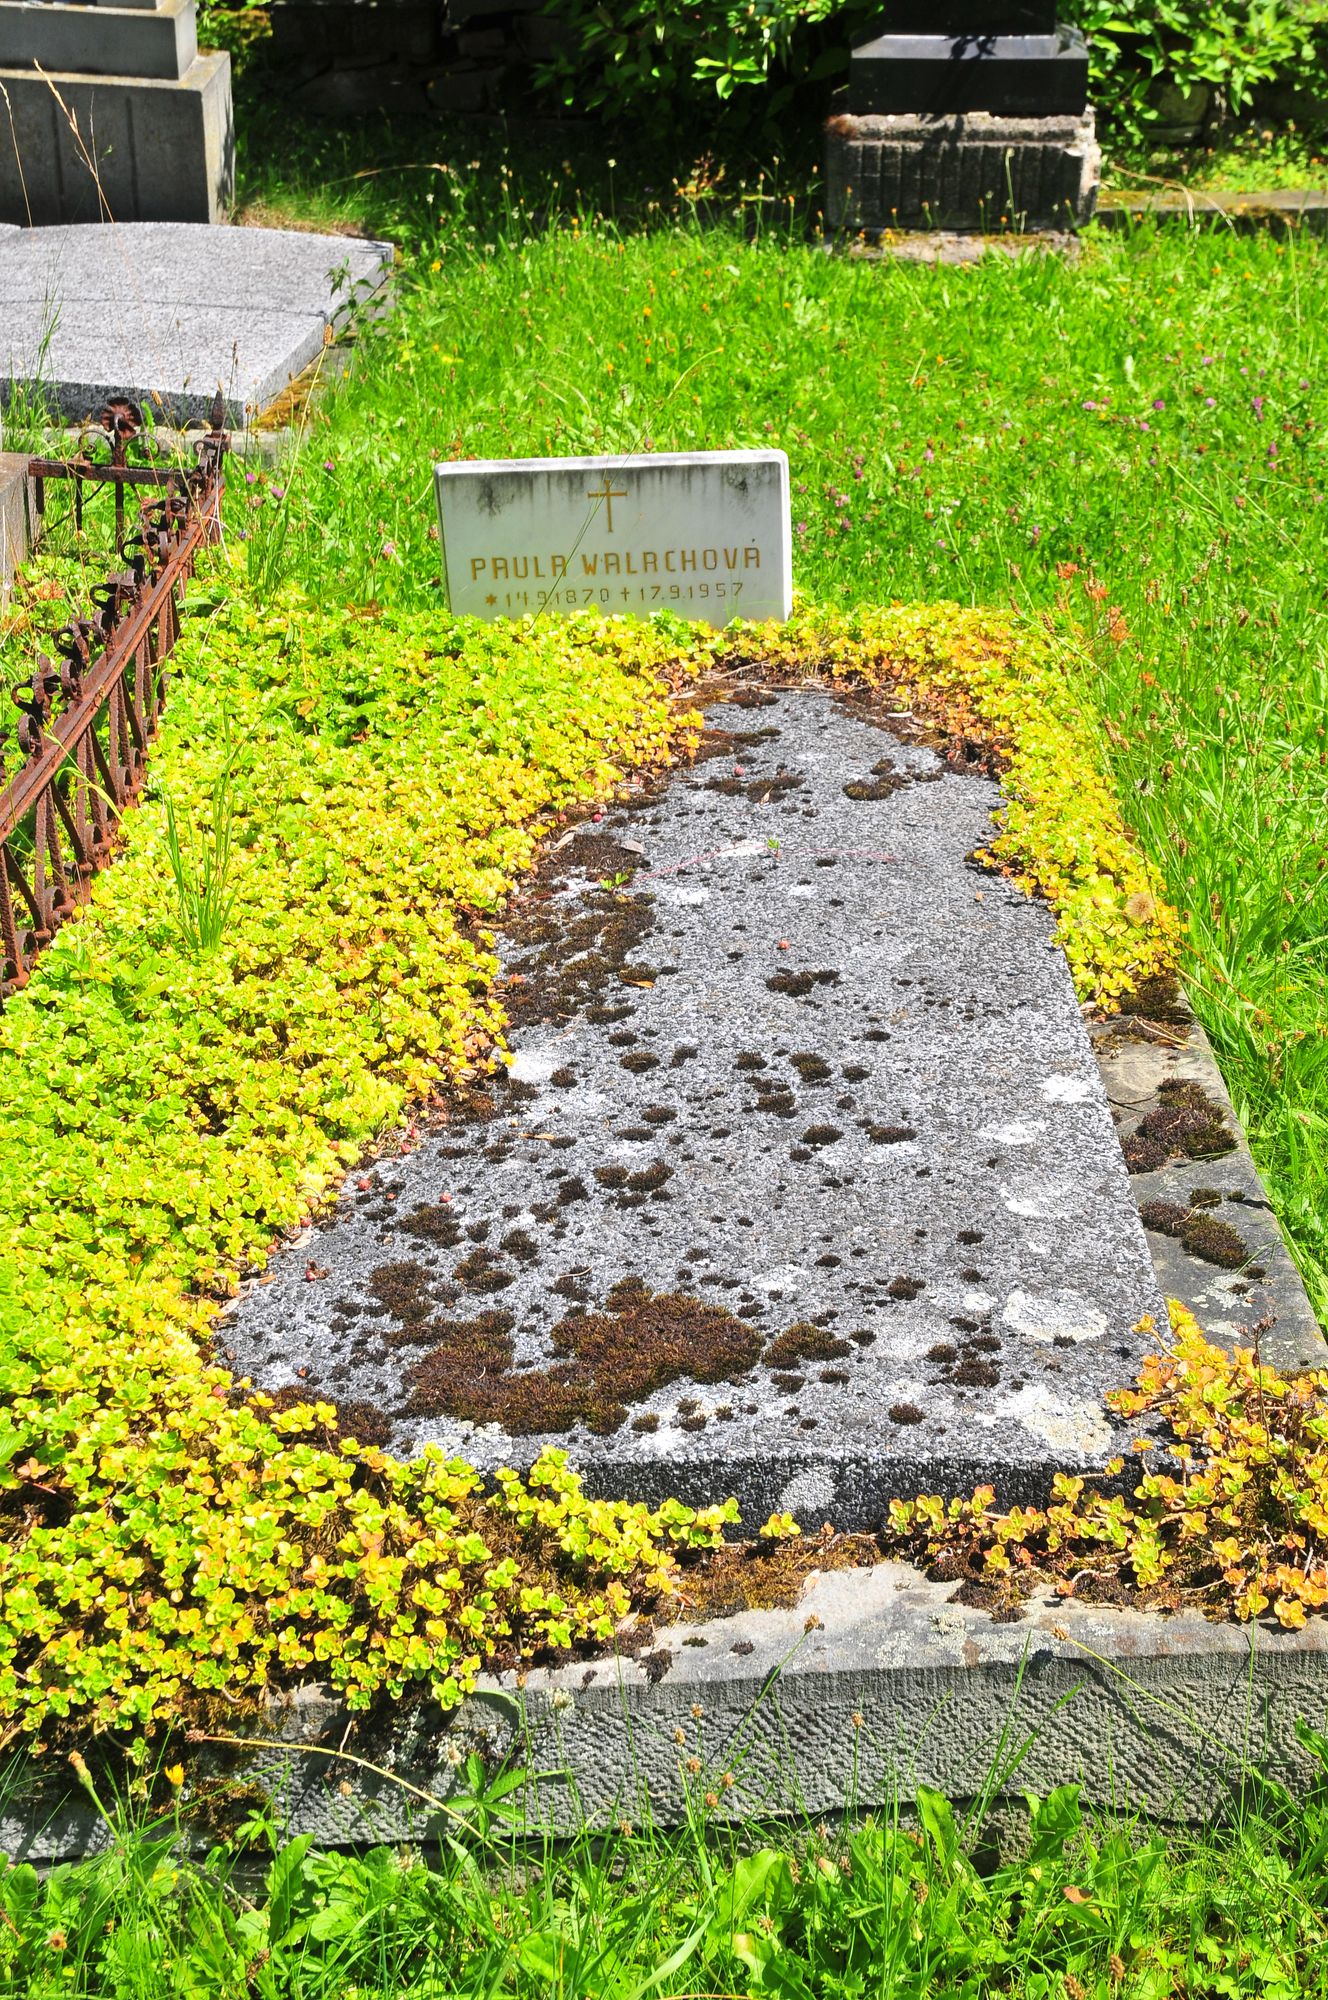 Tombstone of Paula Walach, cemetery in Ligotka Kameralna, as of 2022